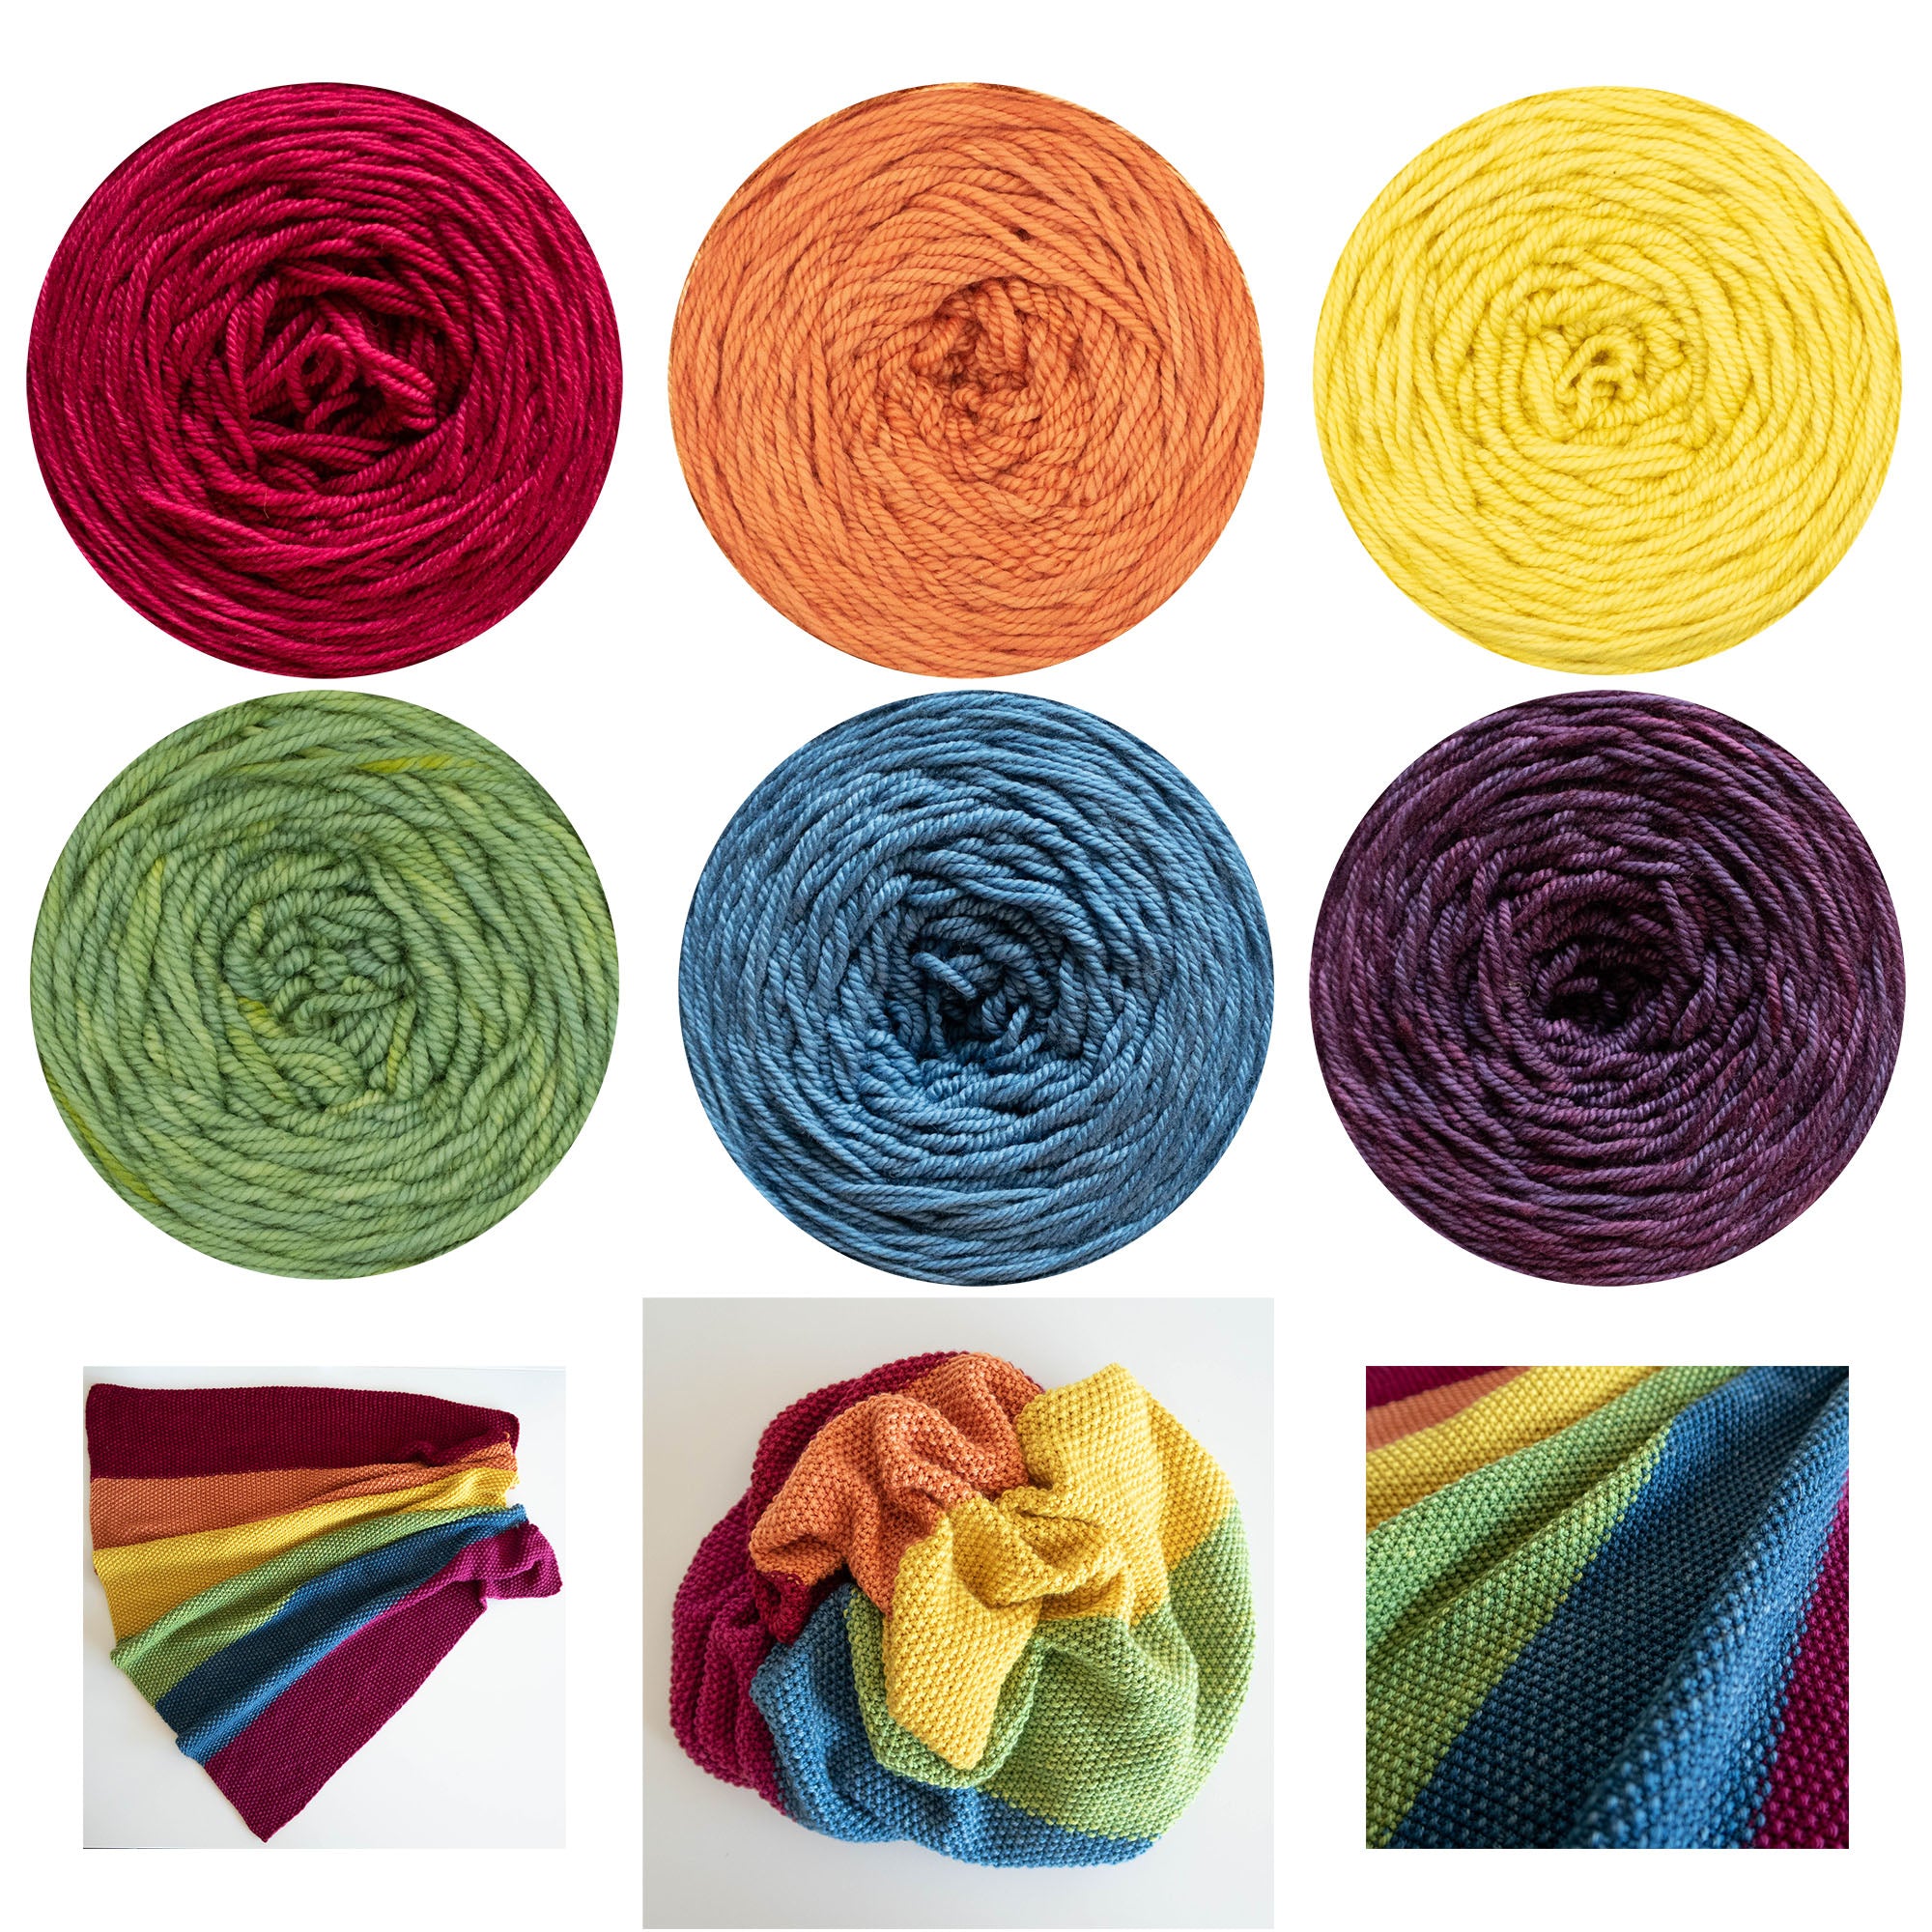 Naturally dyed Rainbow DK yarn baby blanket Knitting kit